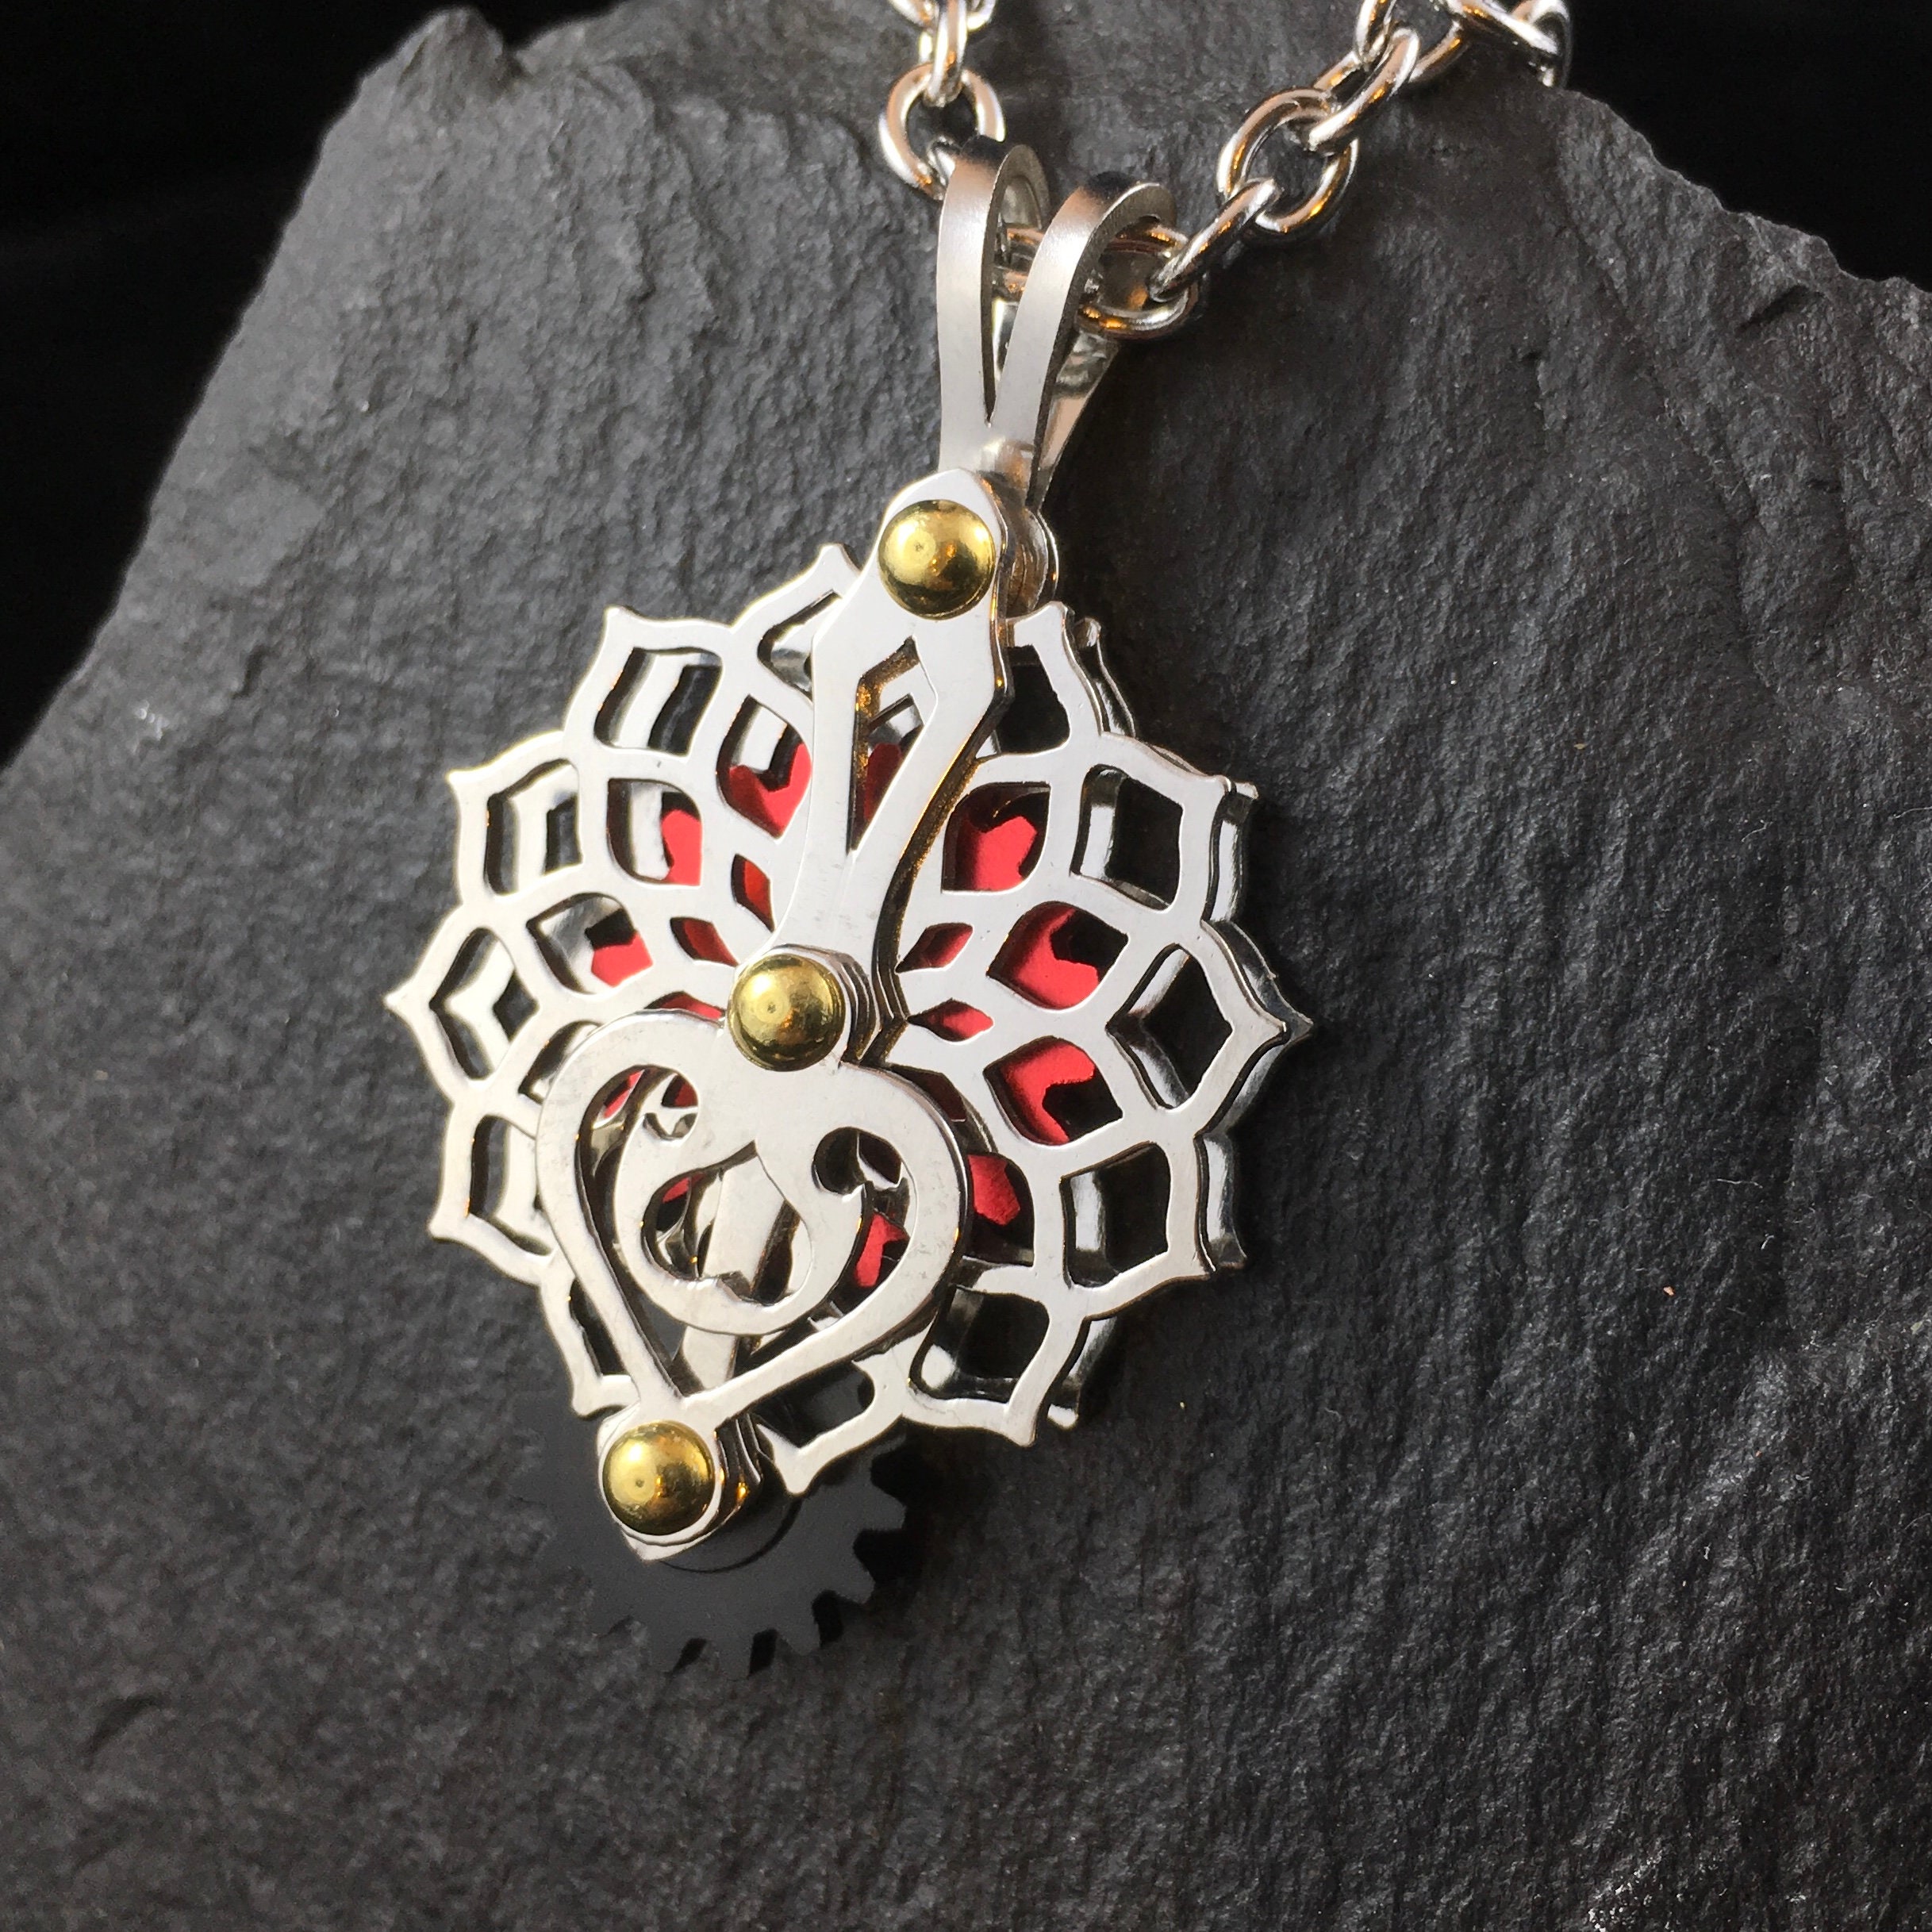 Nautilus Shell Sacred Geometry Brass Pendant Necklace - Heart Mala Yoga  Jewellery